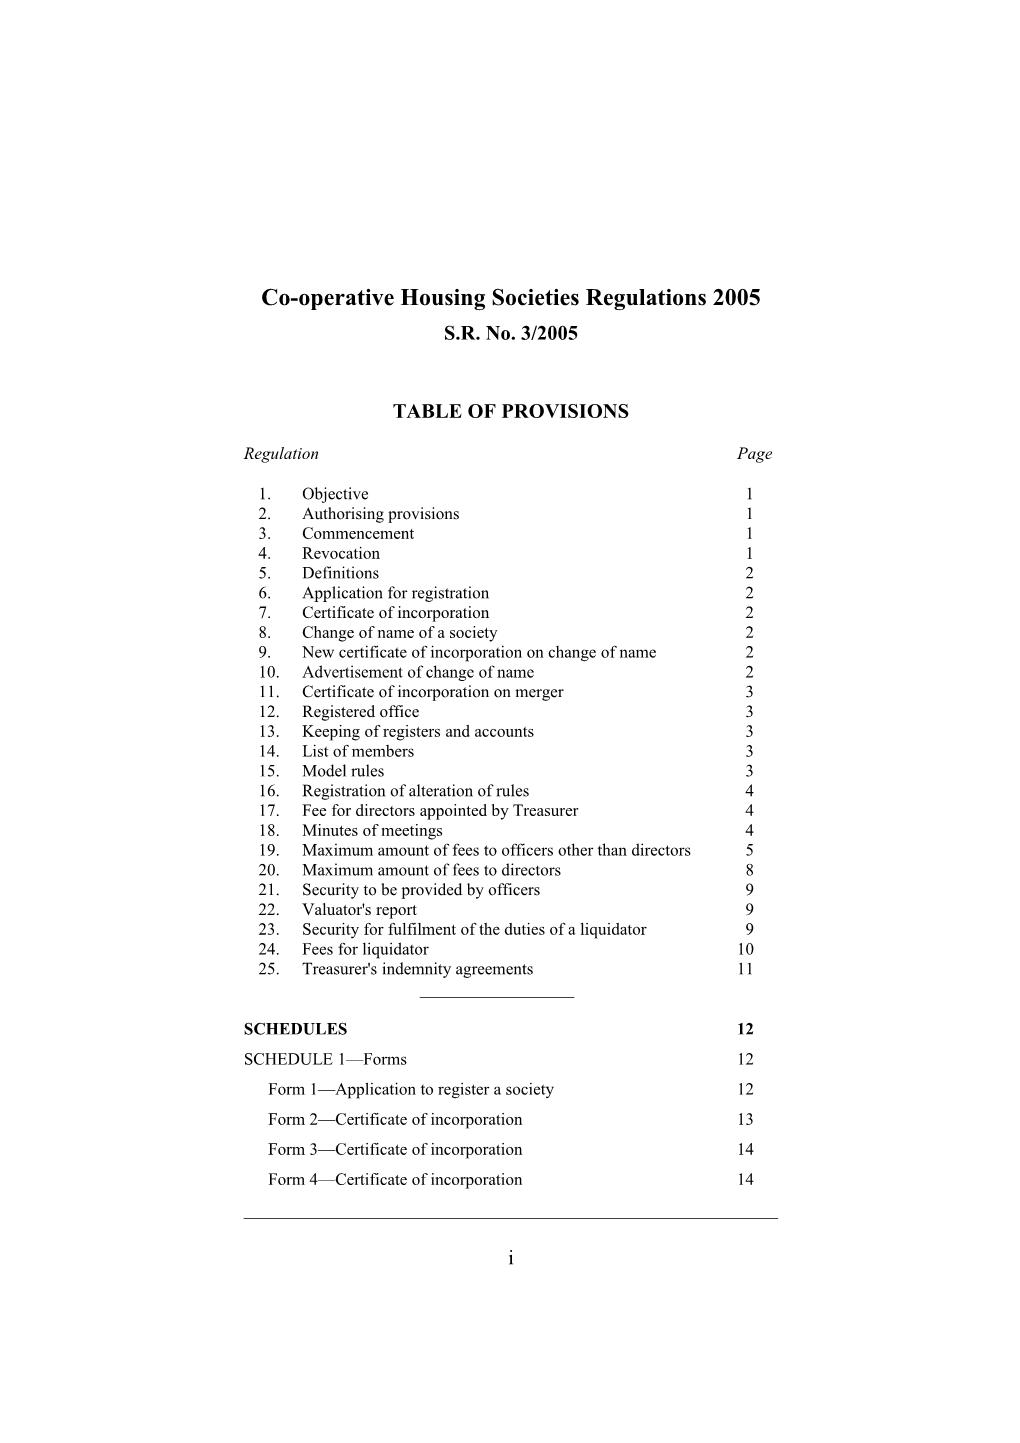 Co-Operative Housing Societies Regulations 2005